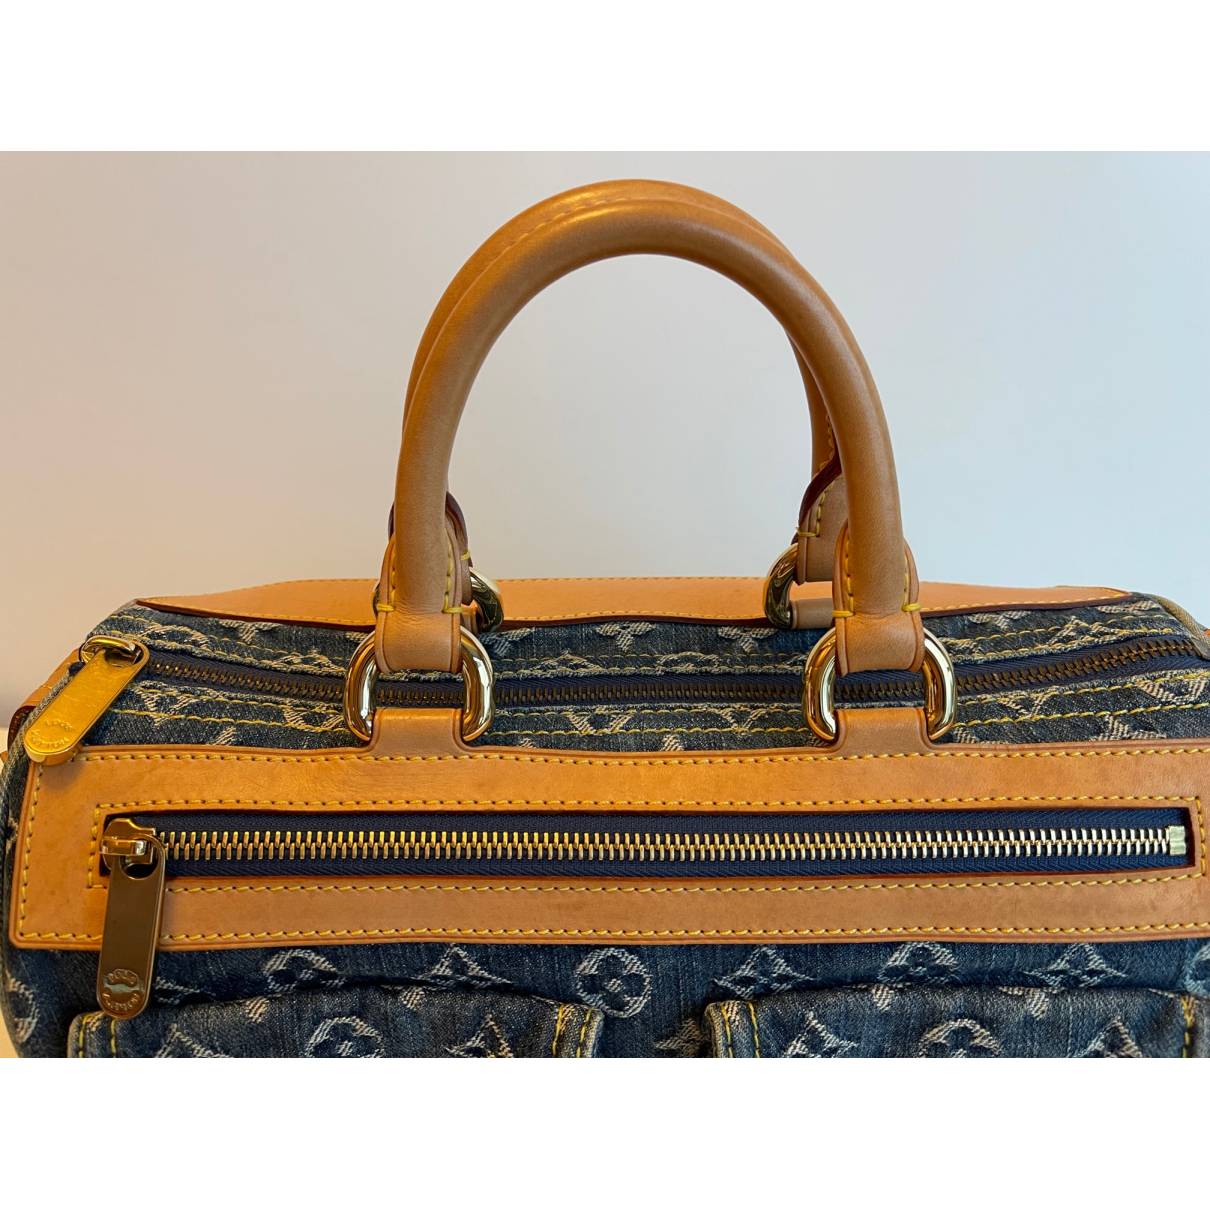 Manhattan handbag Louis Vuitton